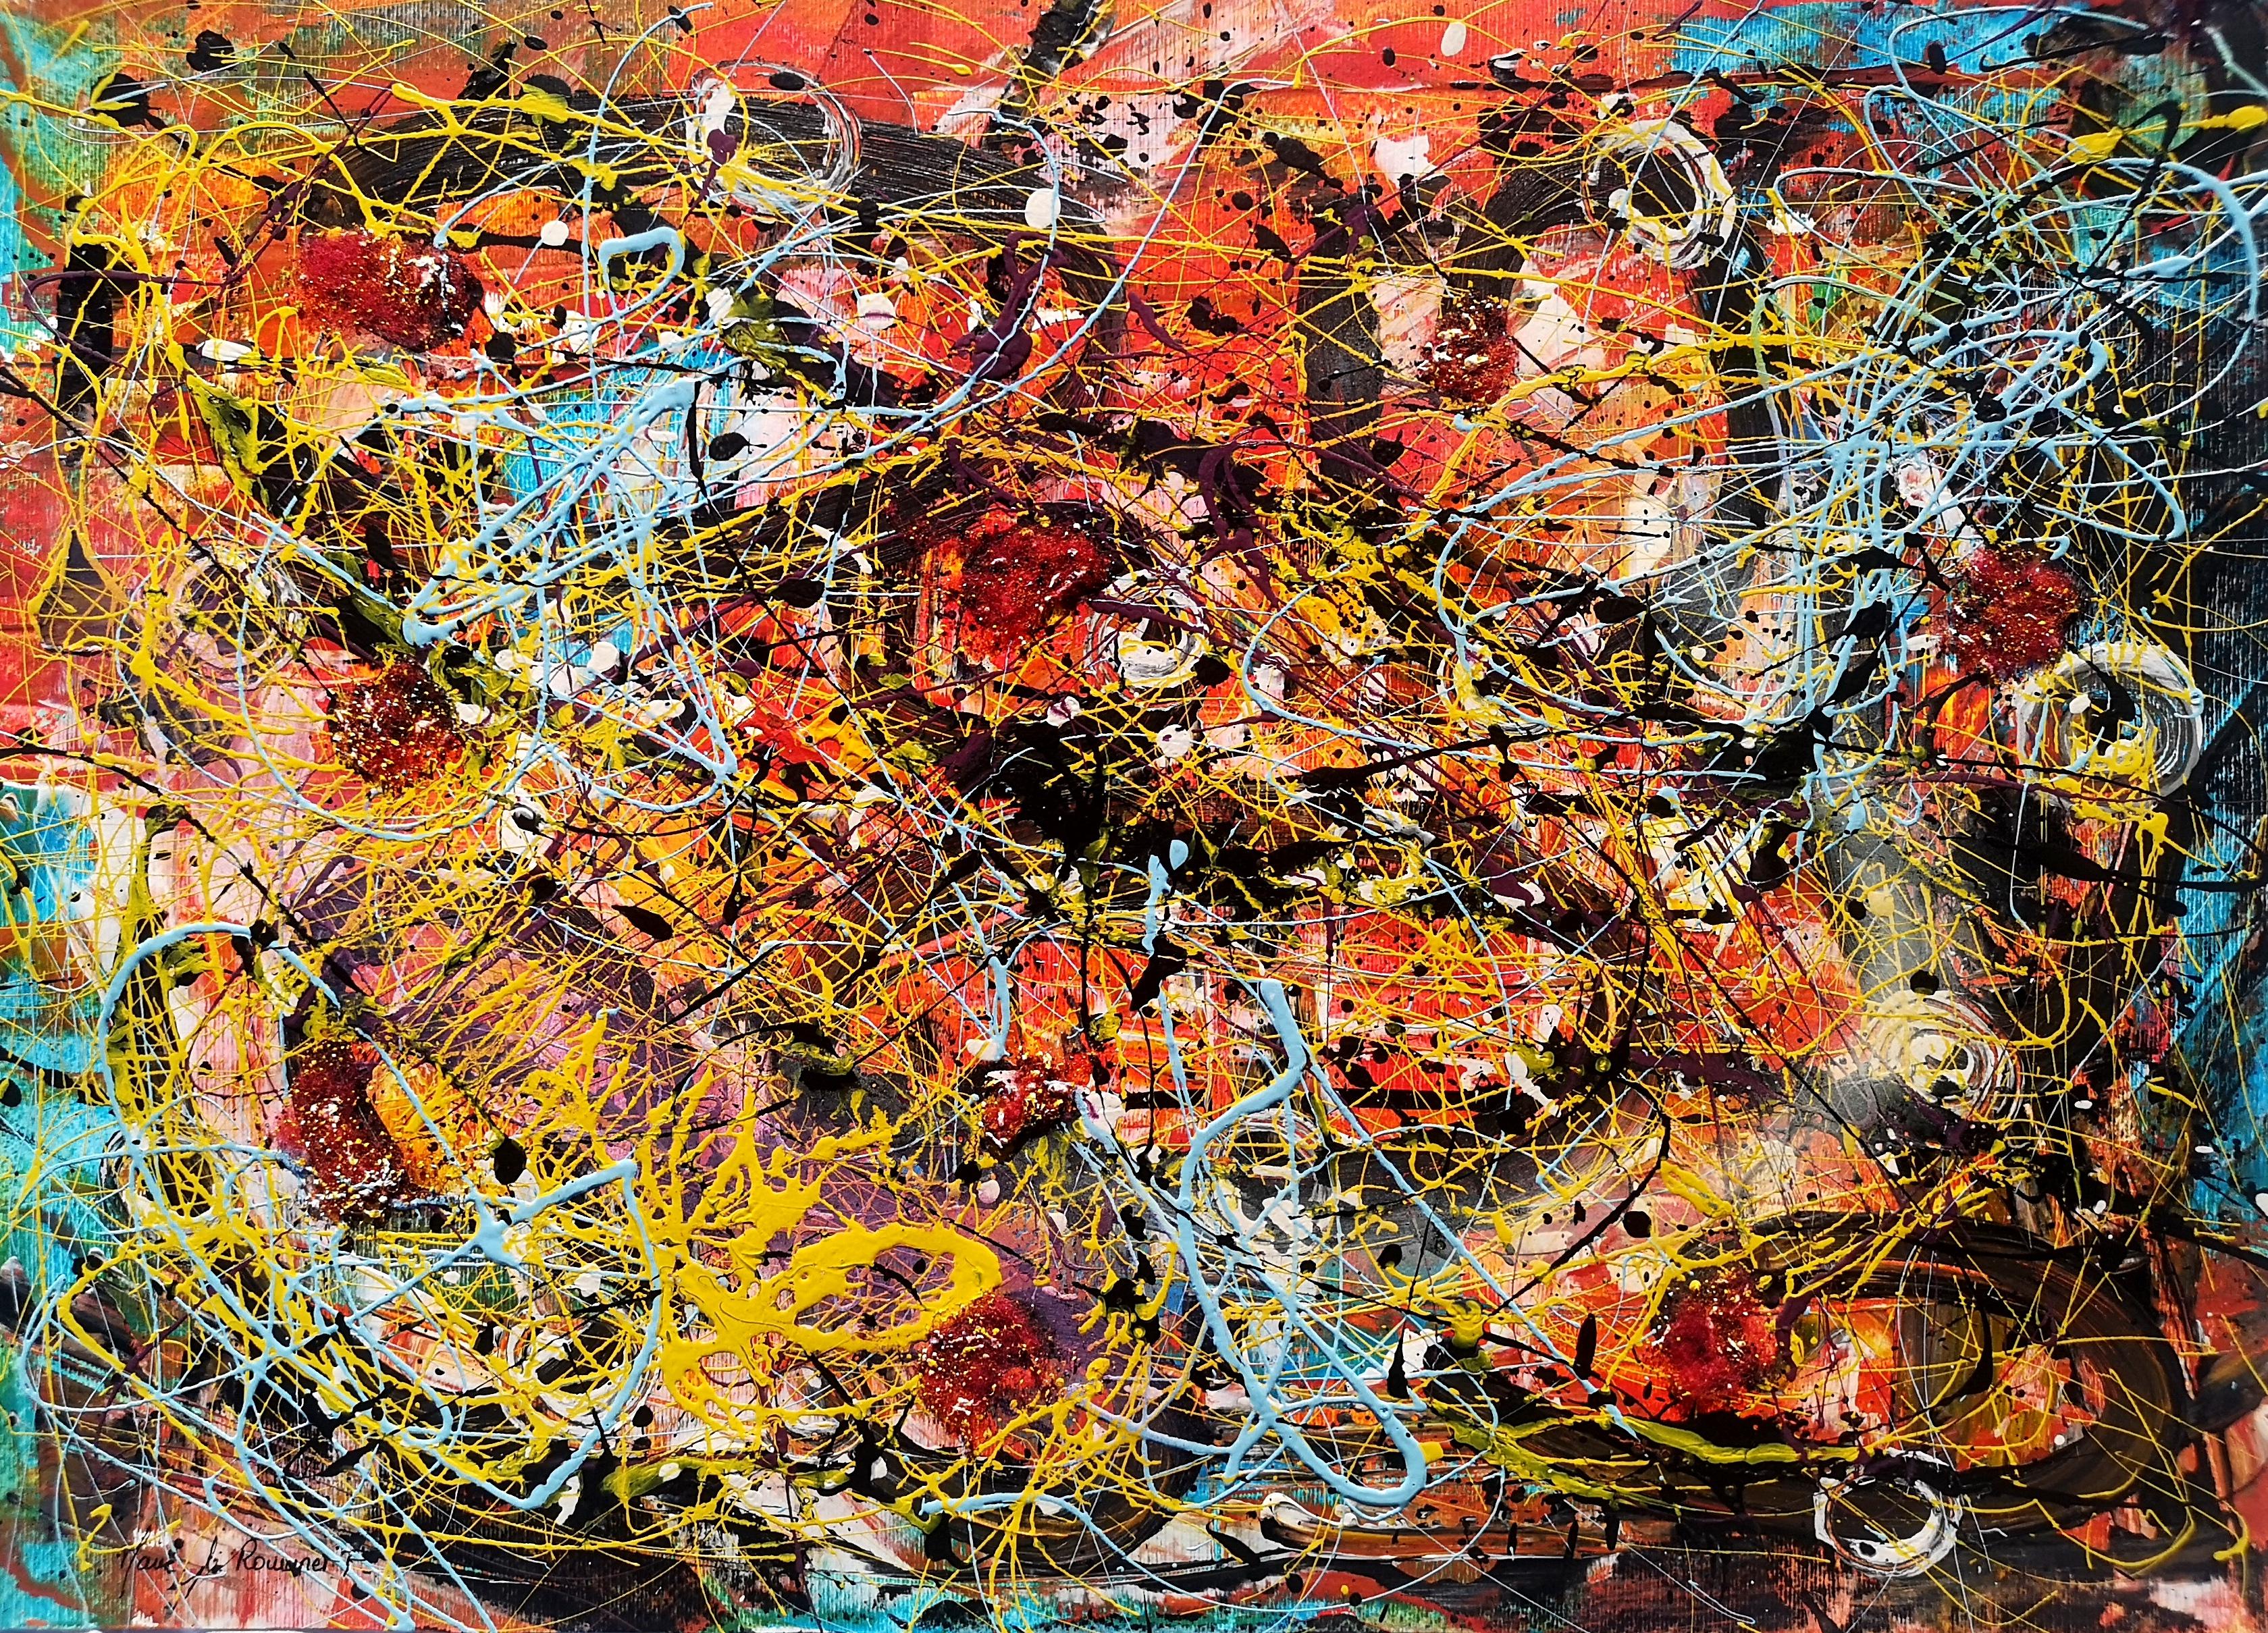 "L'AU DELA DES MOTS"  Pollock style - Mixed Media Art by Marie-Laure Romanet Prin company